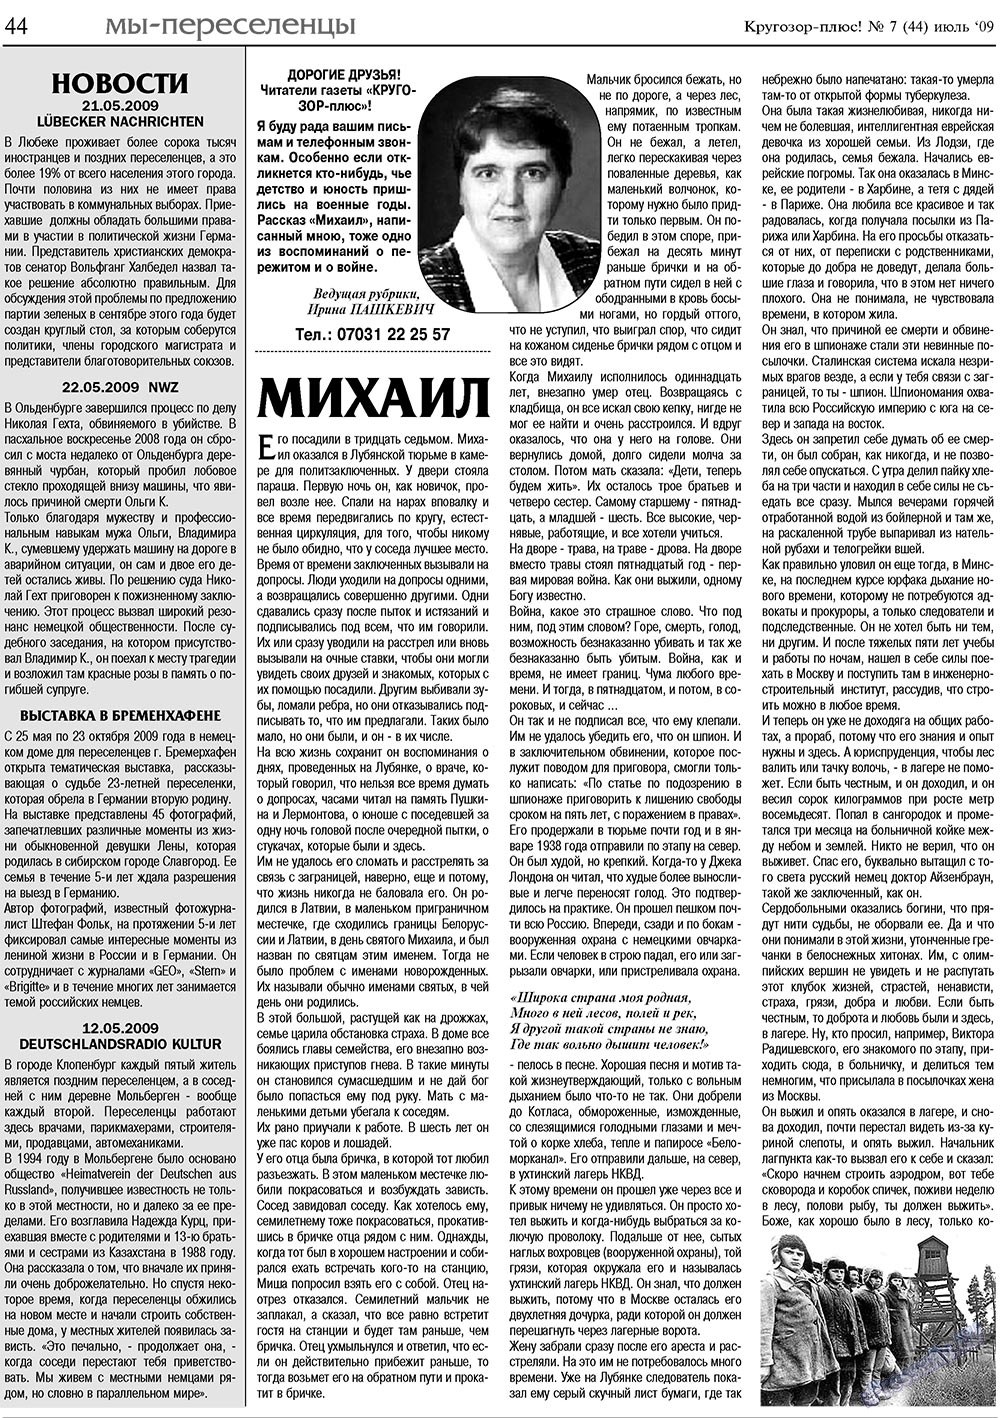 Кругозор плюс! (газета). 2009 год, номер 7, стр. 44